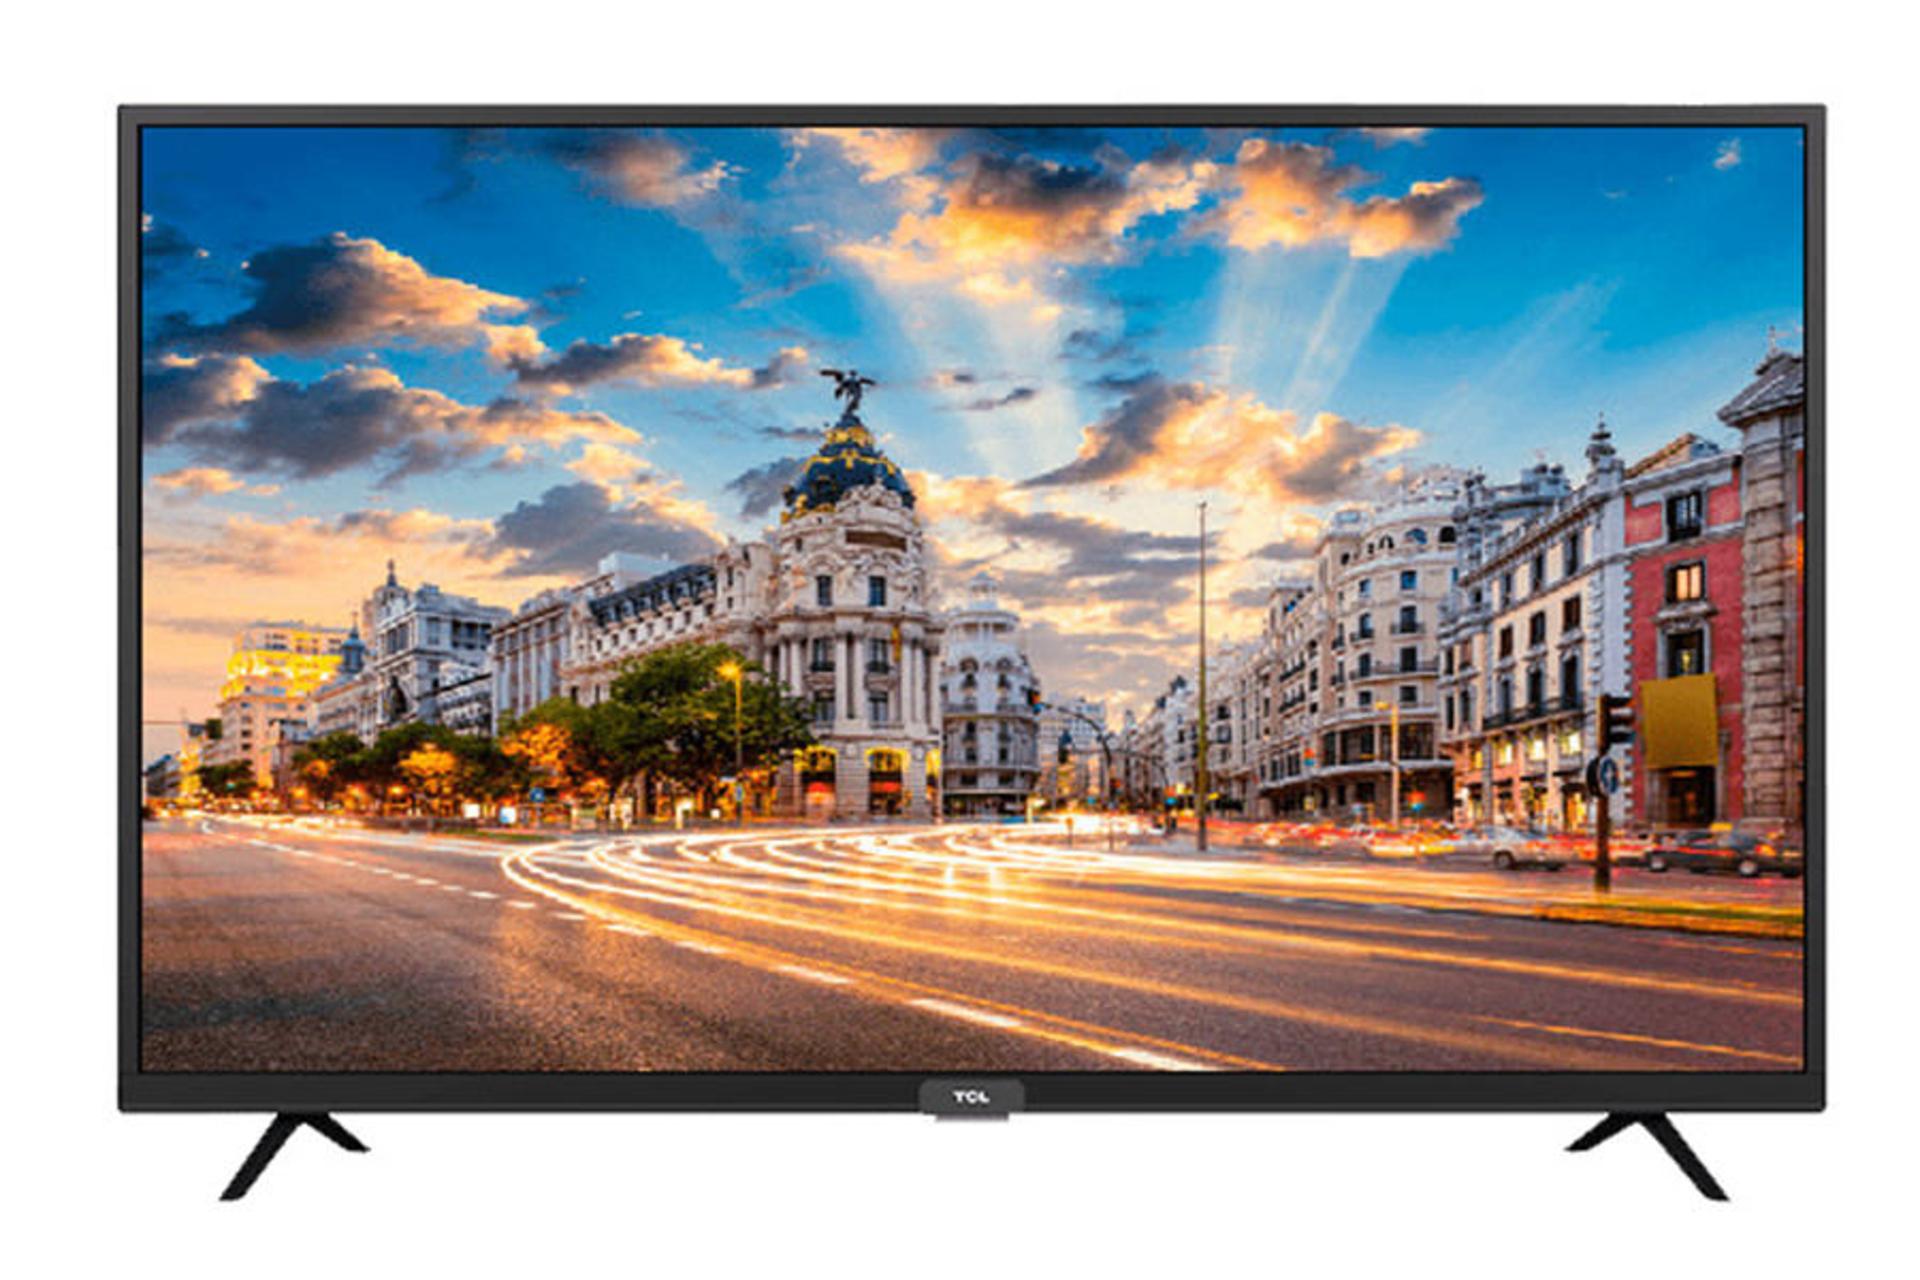 قیمت تلویزیون تی سی ال S6510 مدل 43 اینچ + مشخصات